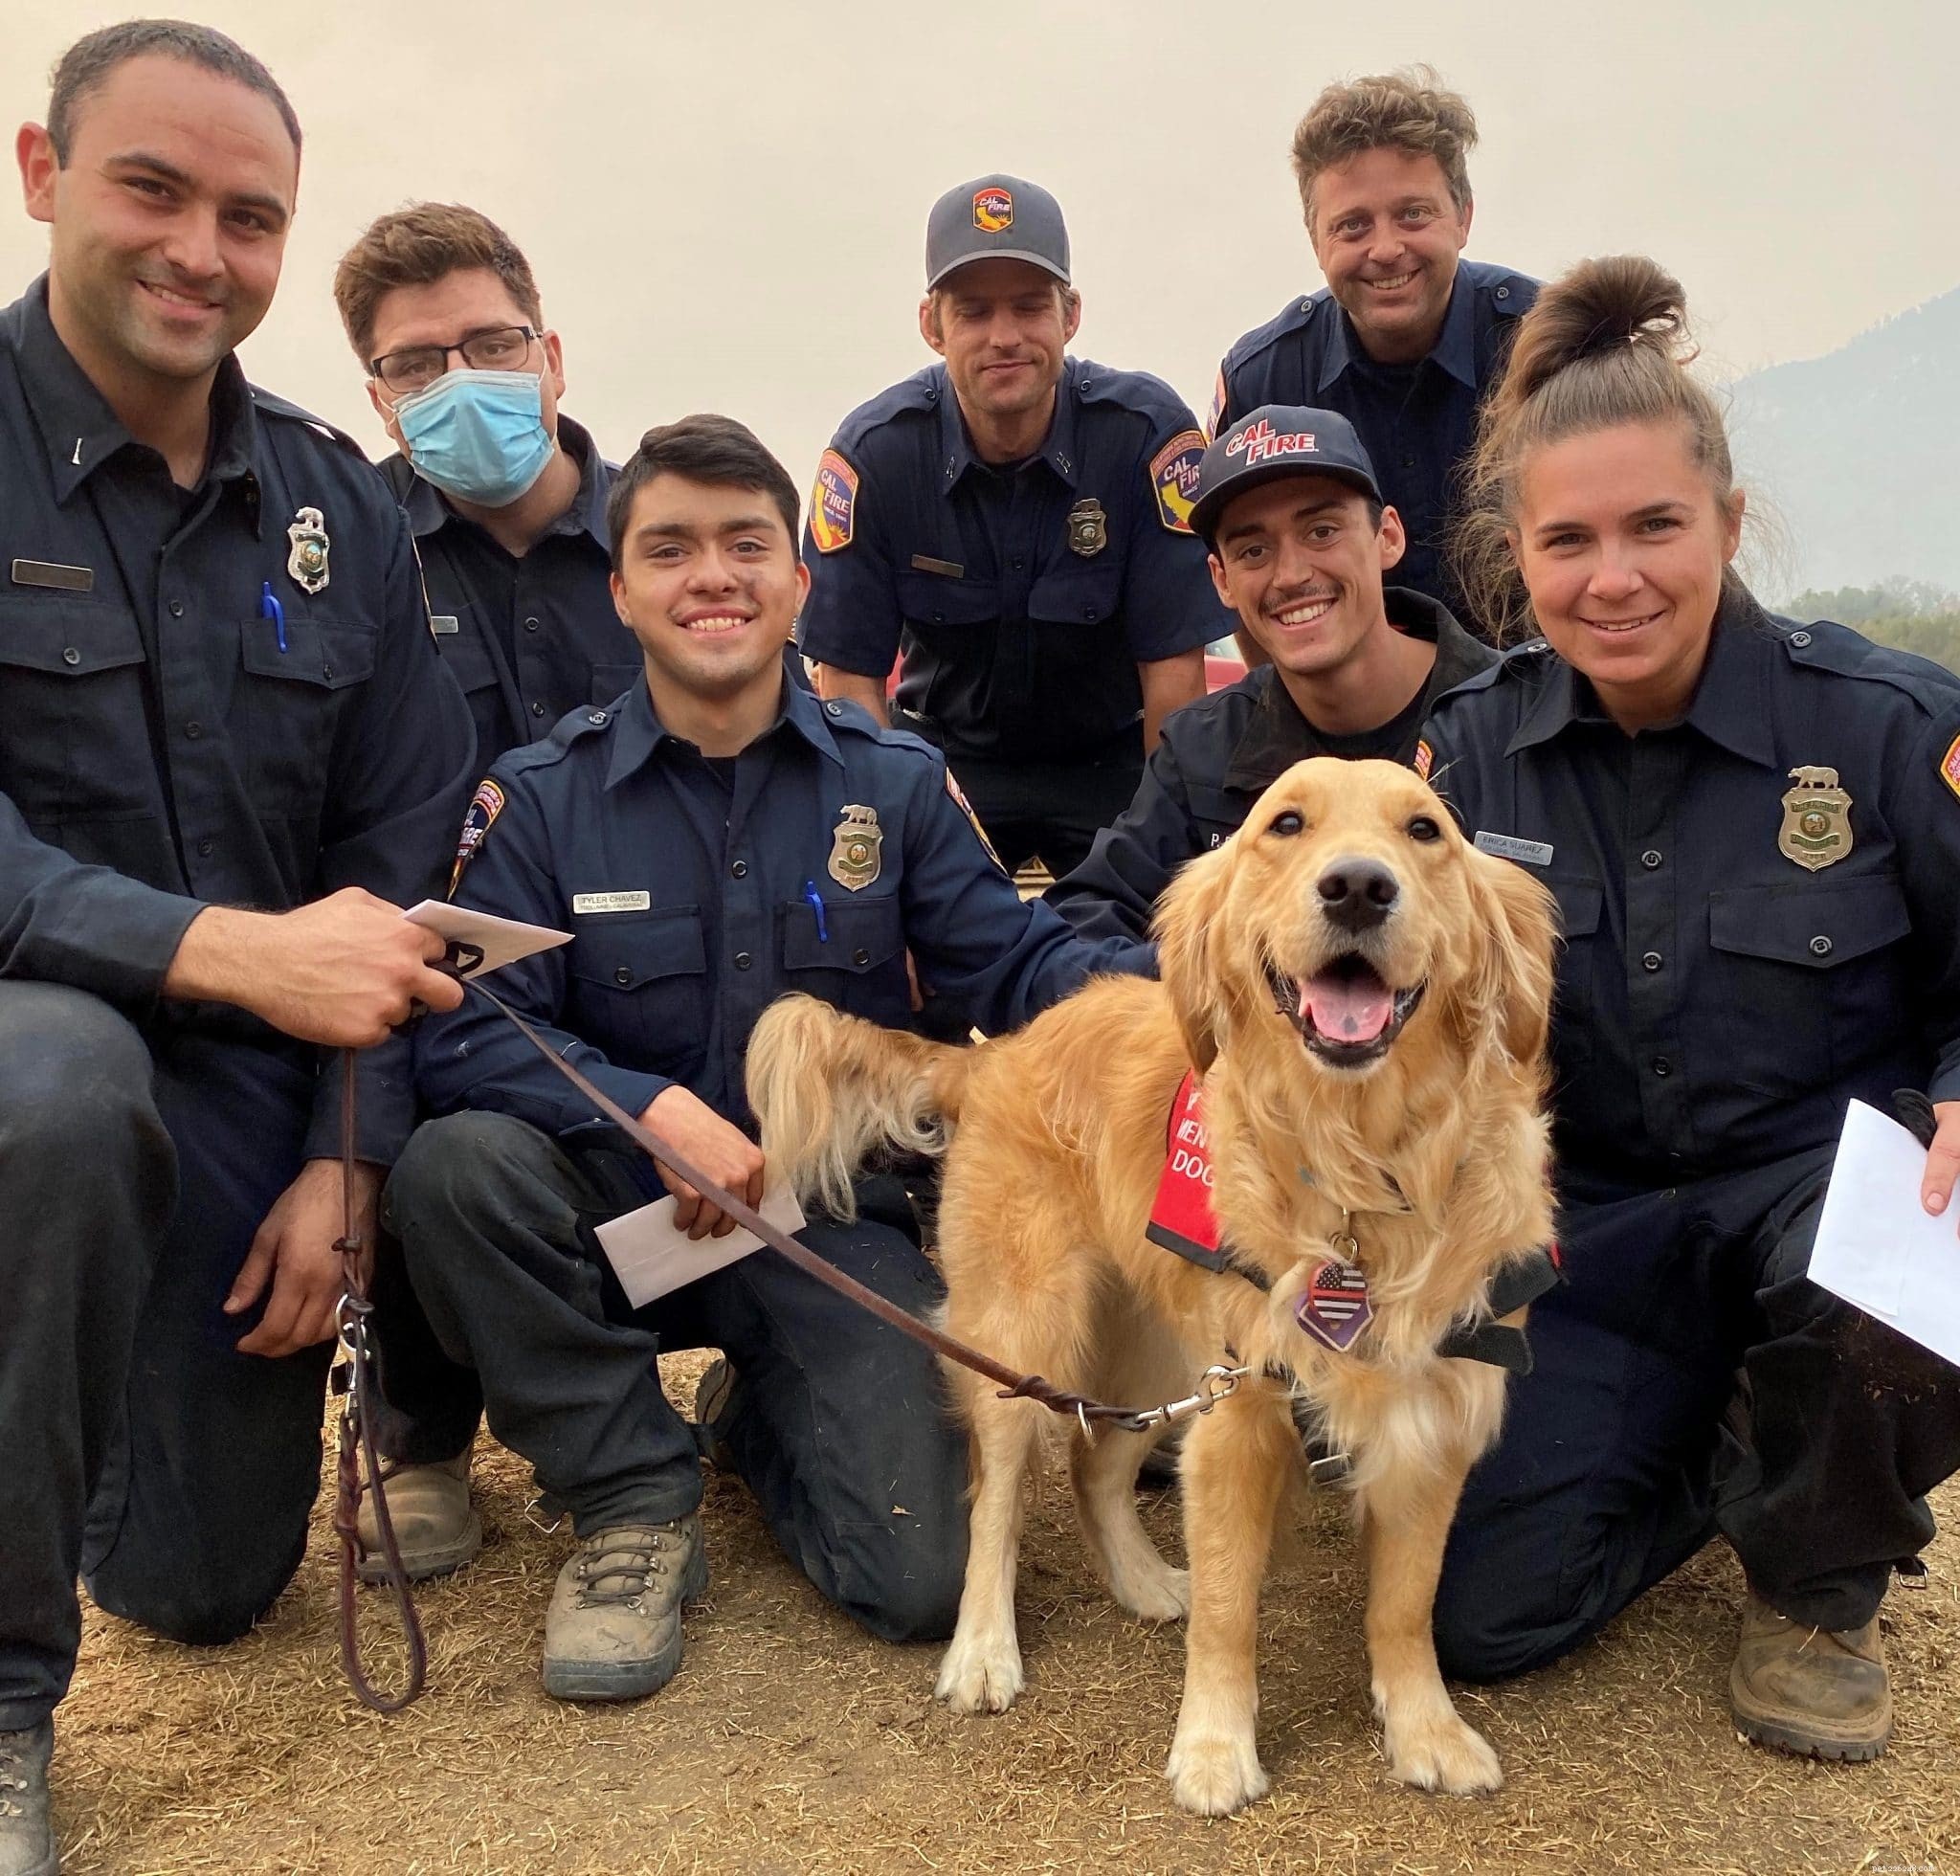 Sweet Therapy Dog는 서부 해안 화재와 싸우고 있는 소방관에게 꼭 필요한 구호 활동을 제공합니다.